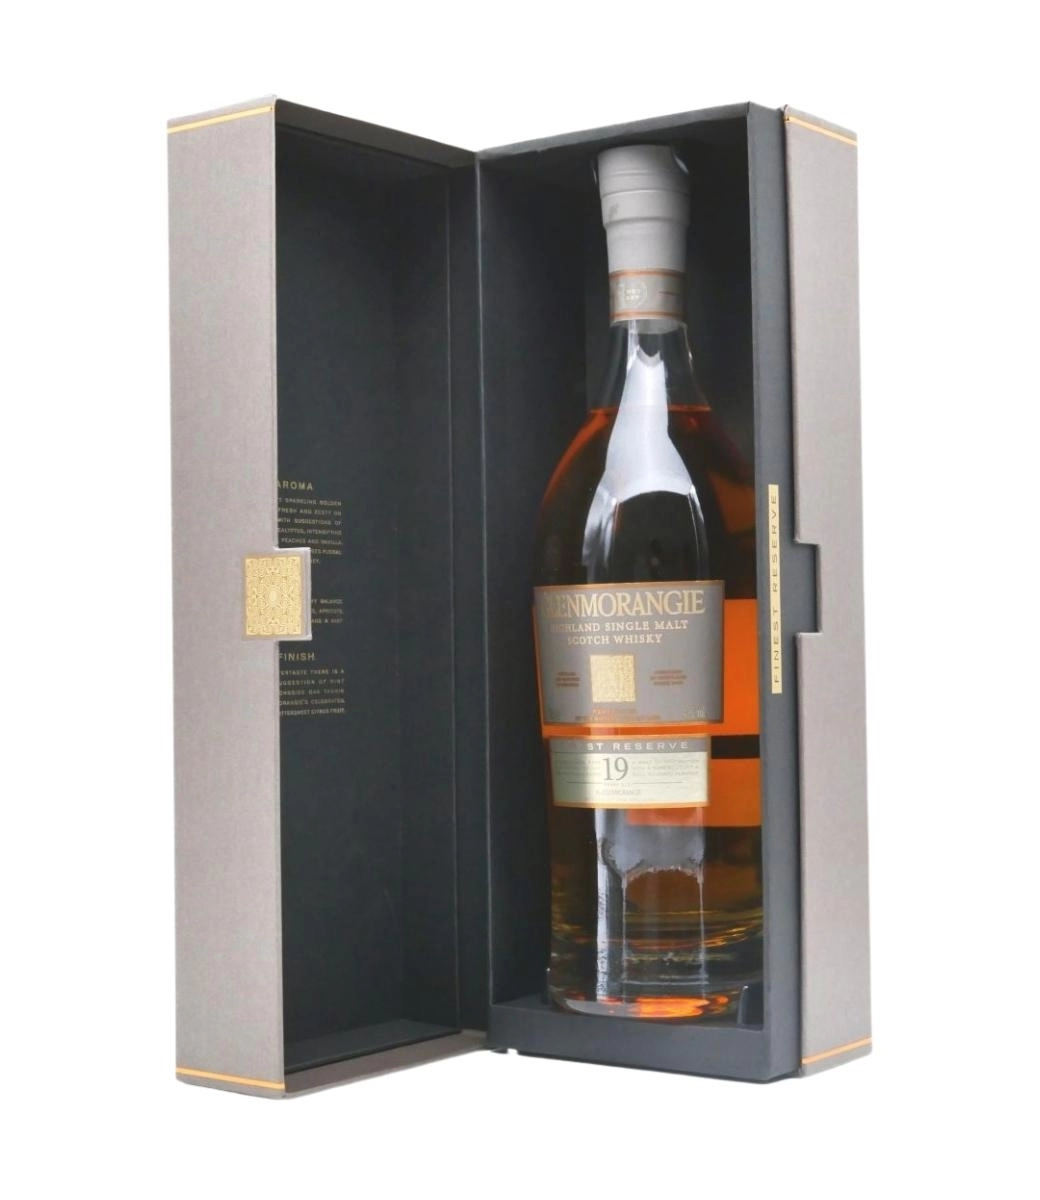 Whisky Glenmorangie 19 Ani 0.7l 0